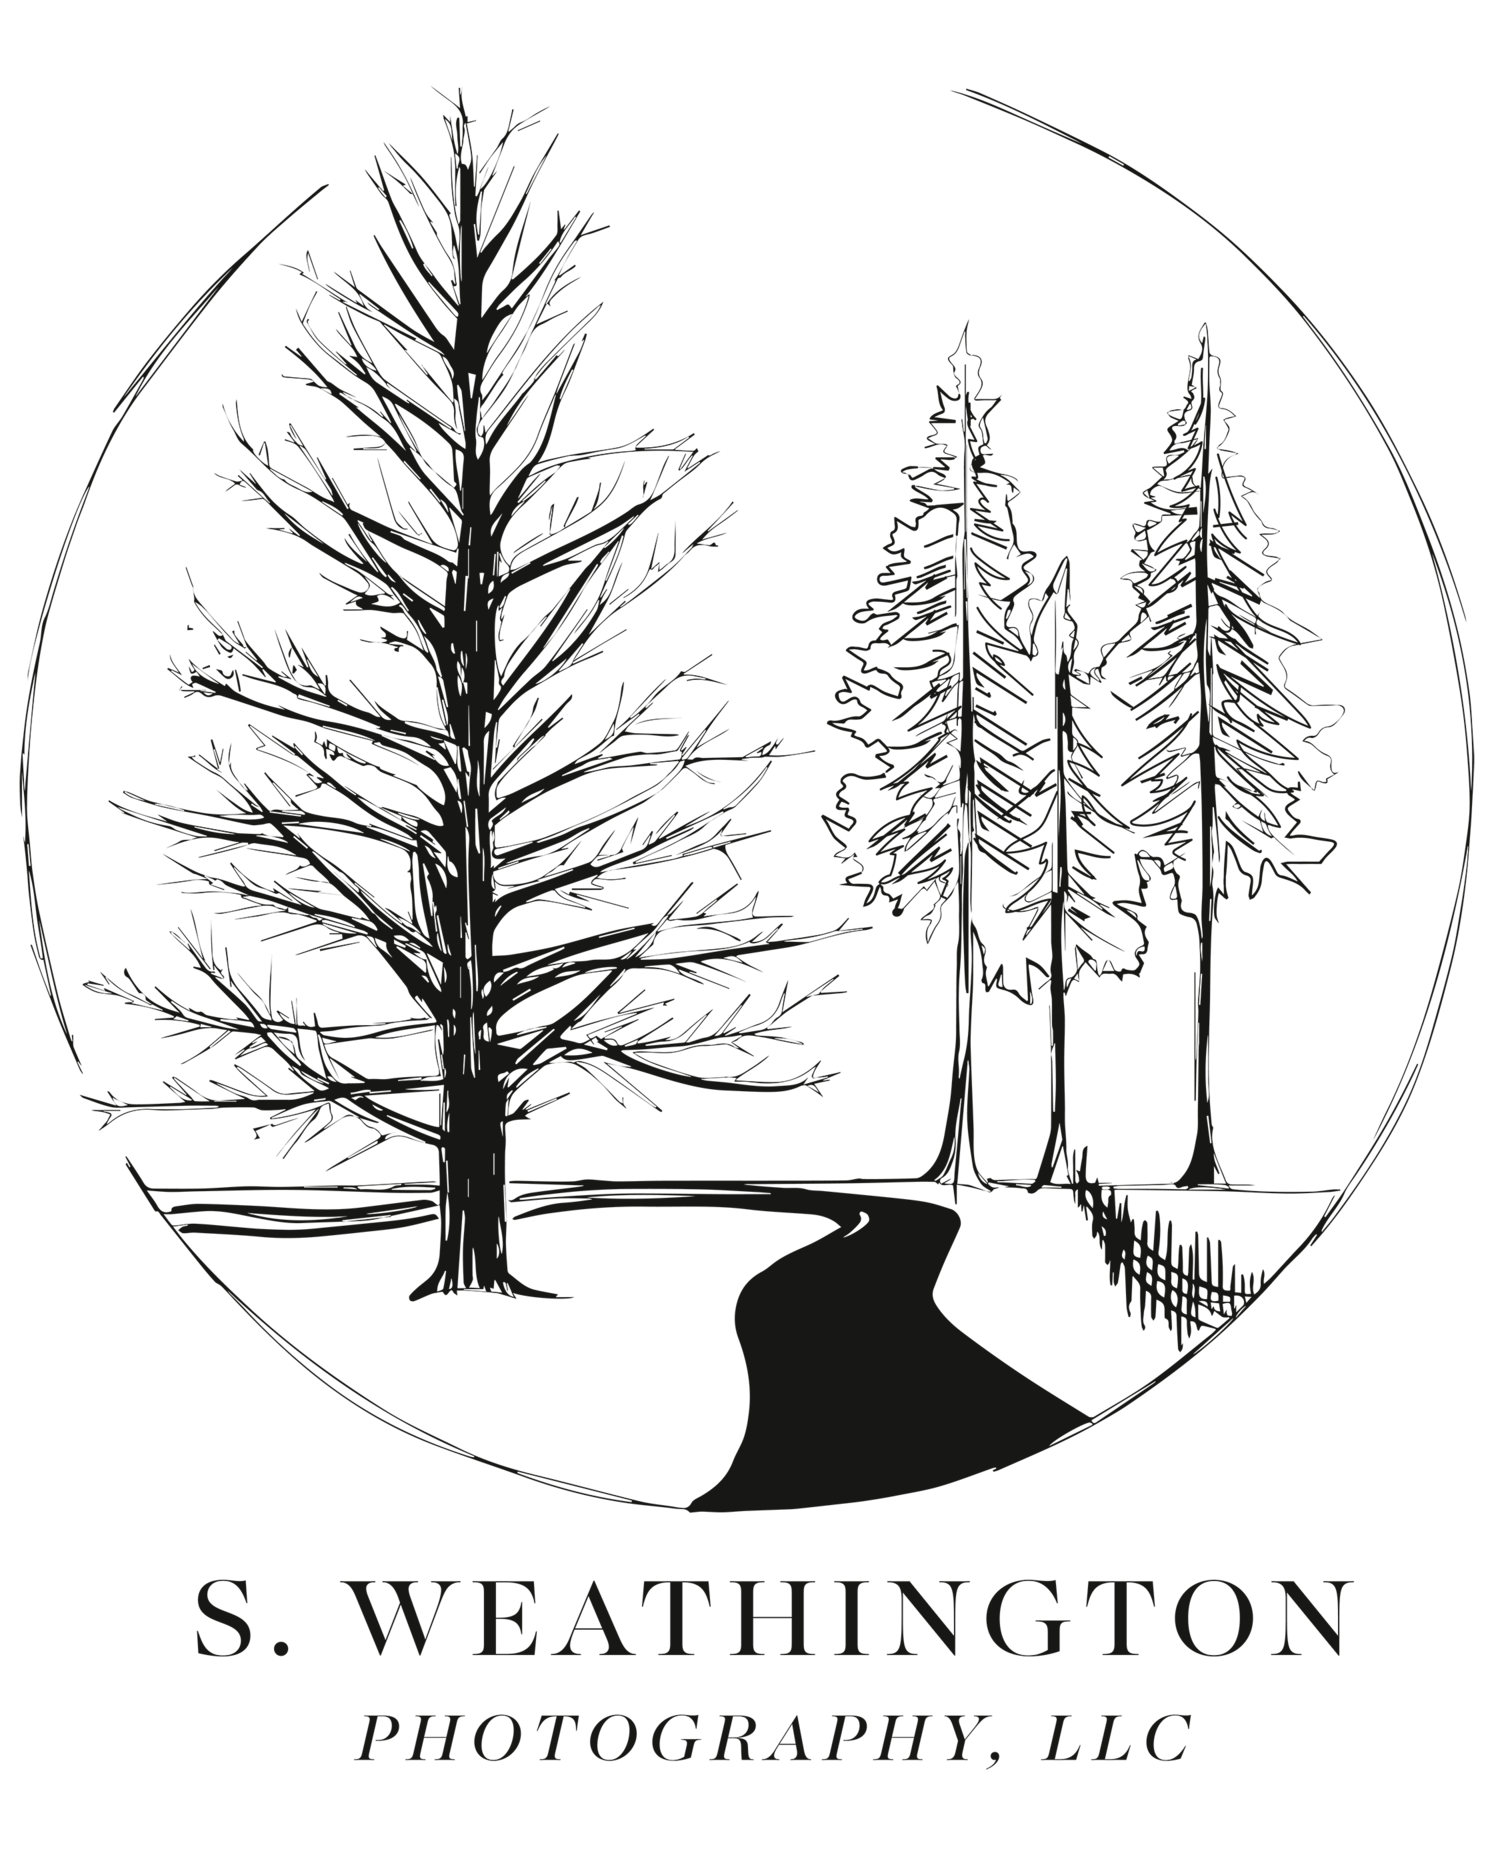 S. Weathington Photography, LLC